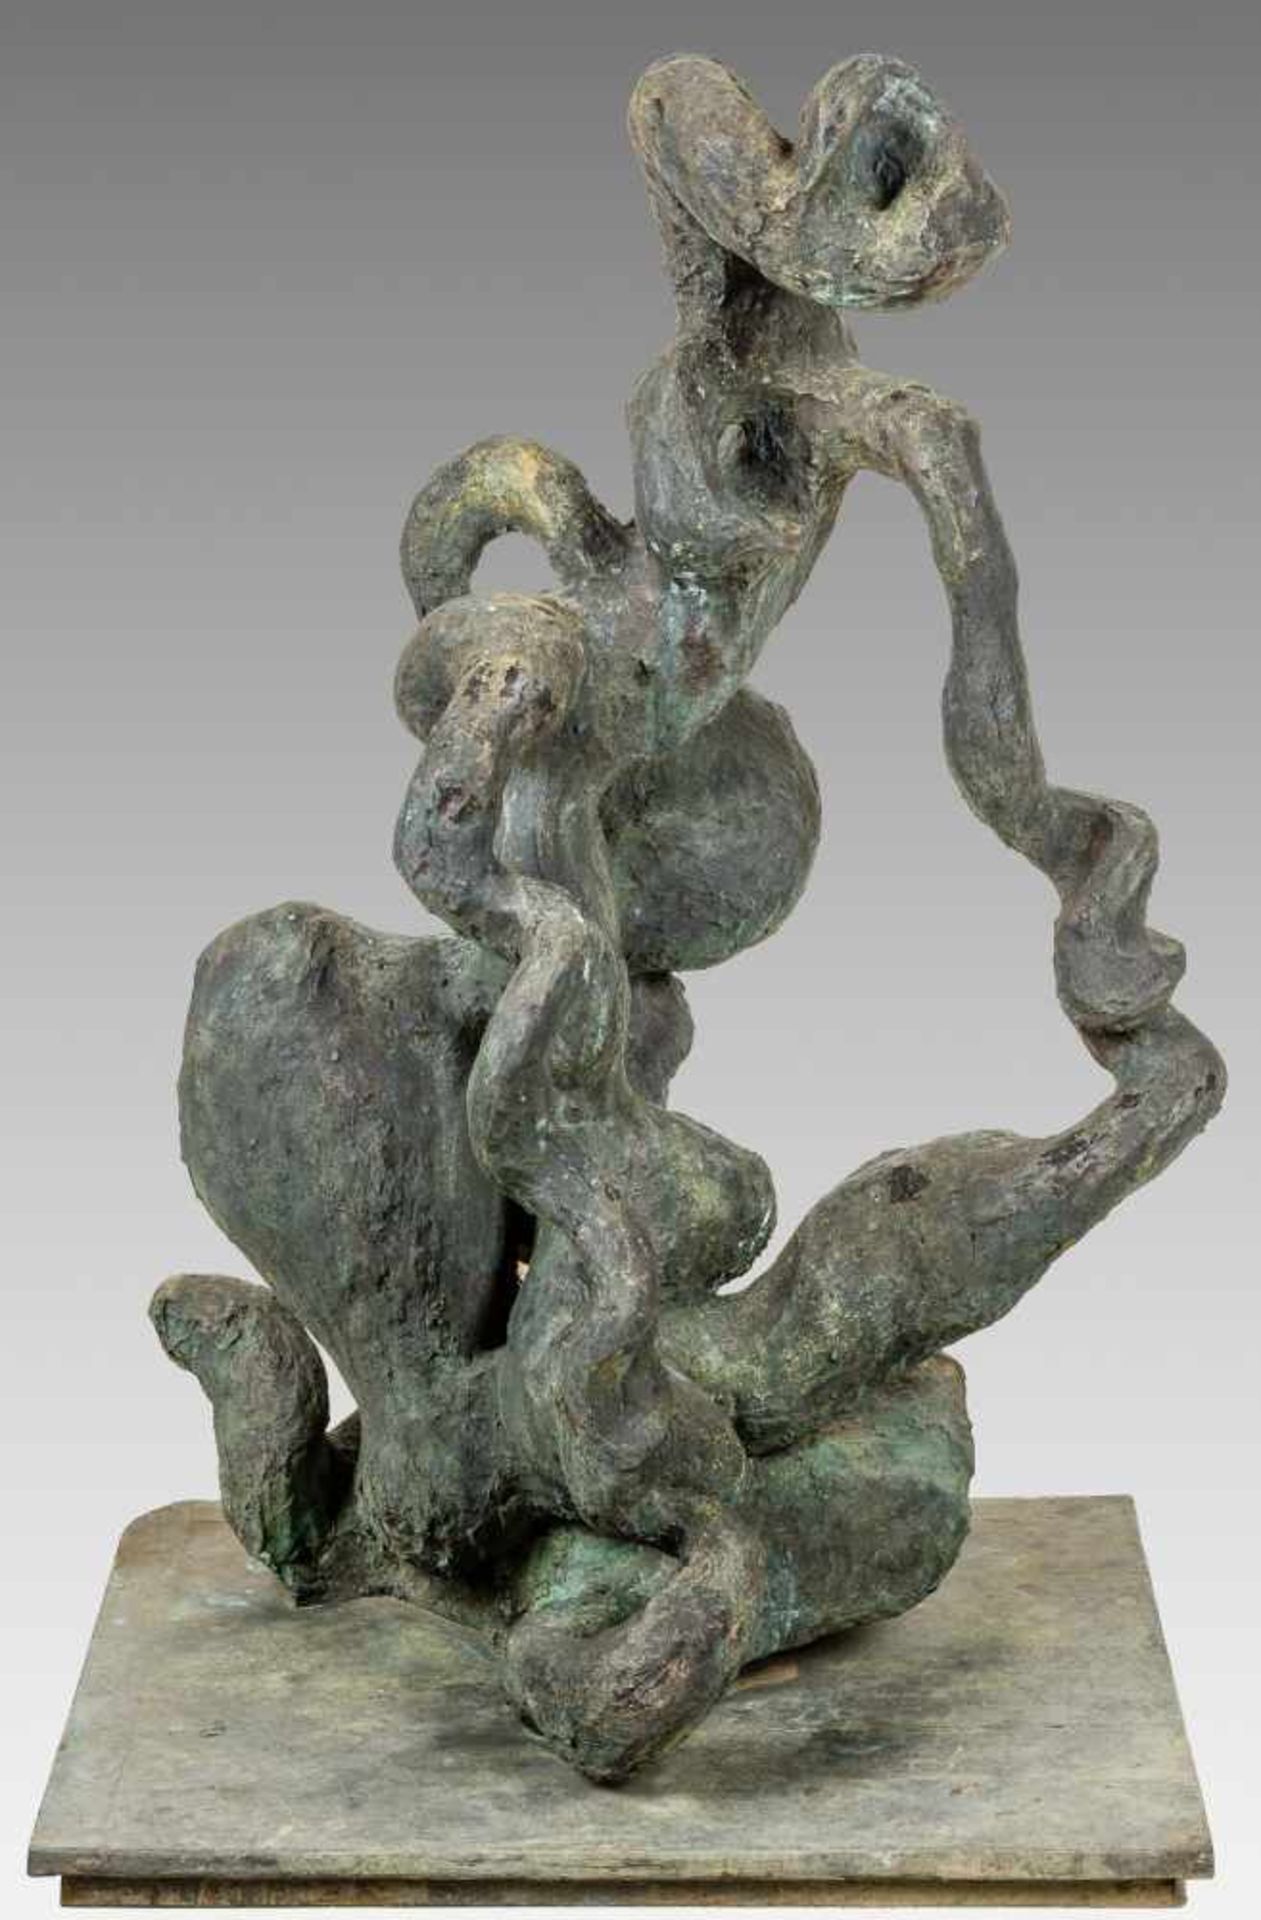 Oswald Oberhuber (hs art) Meran 1931 * NICHT GENAU Bronze, patiniert / bronze, patinated 120 x 76